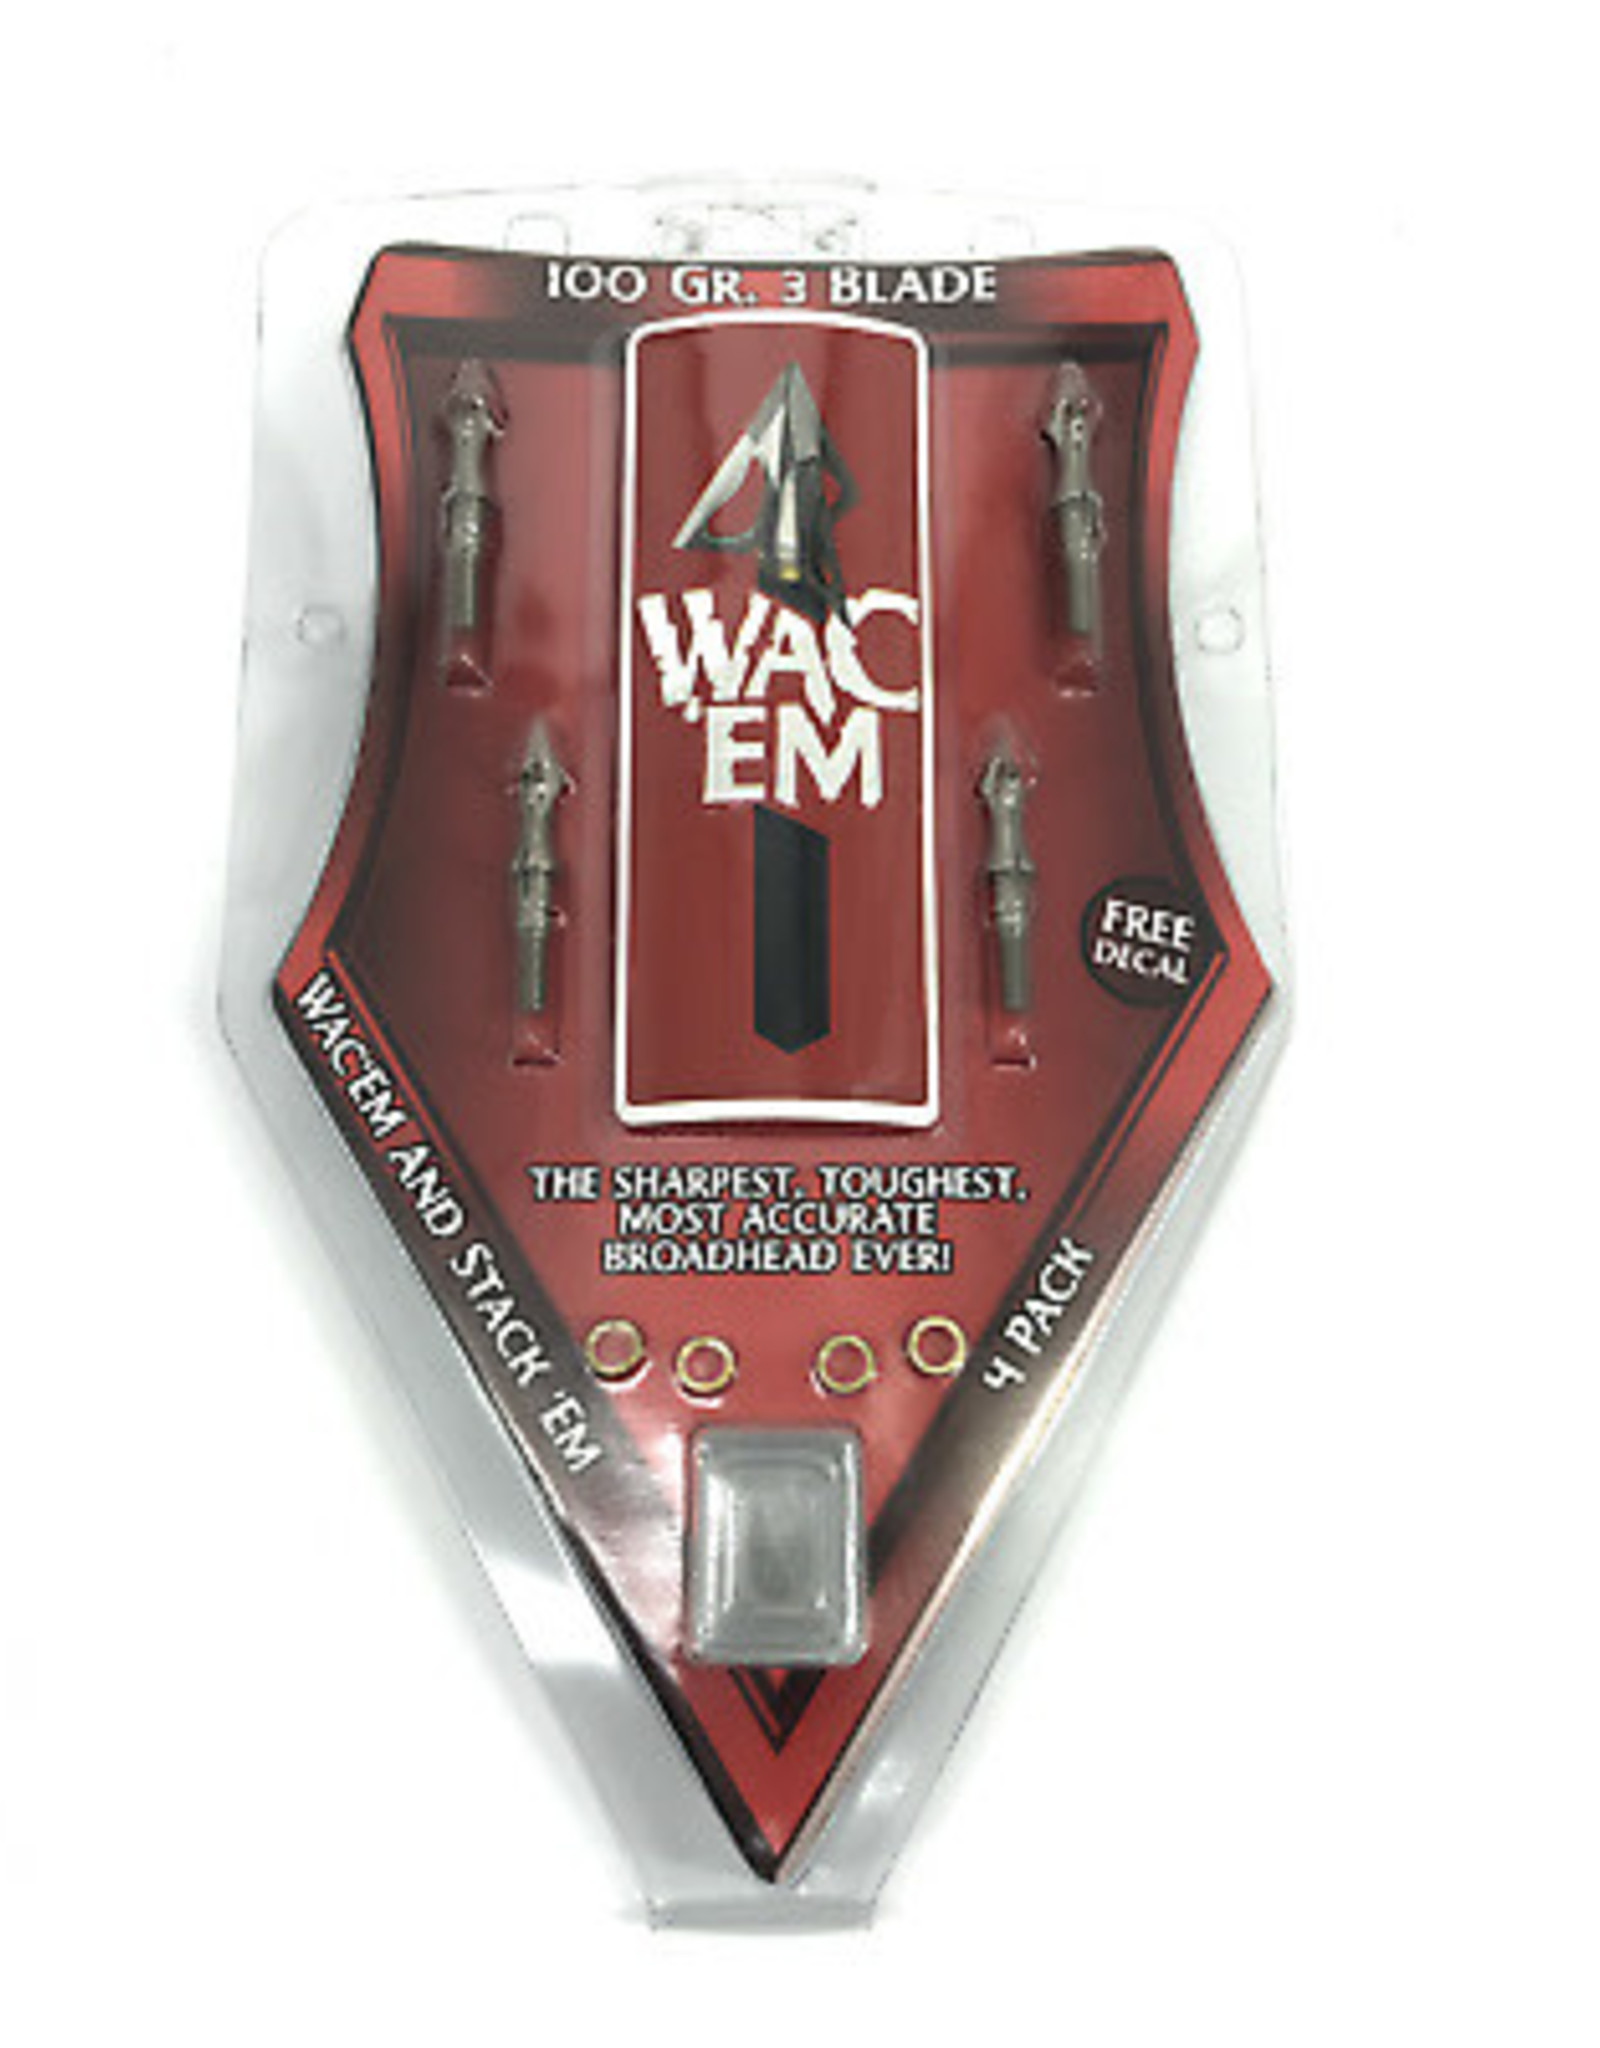 Wac’em Archery Products Wac’Em 100 GR